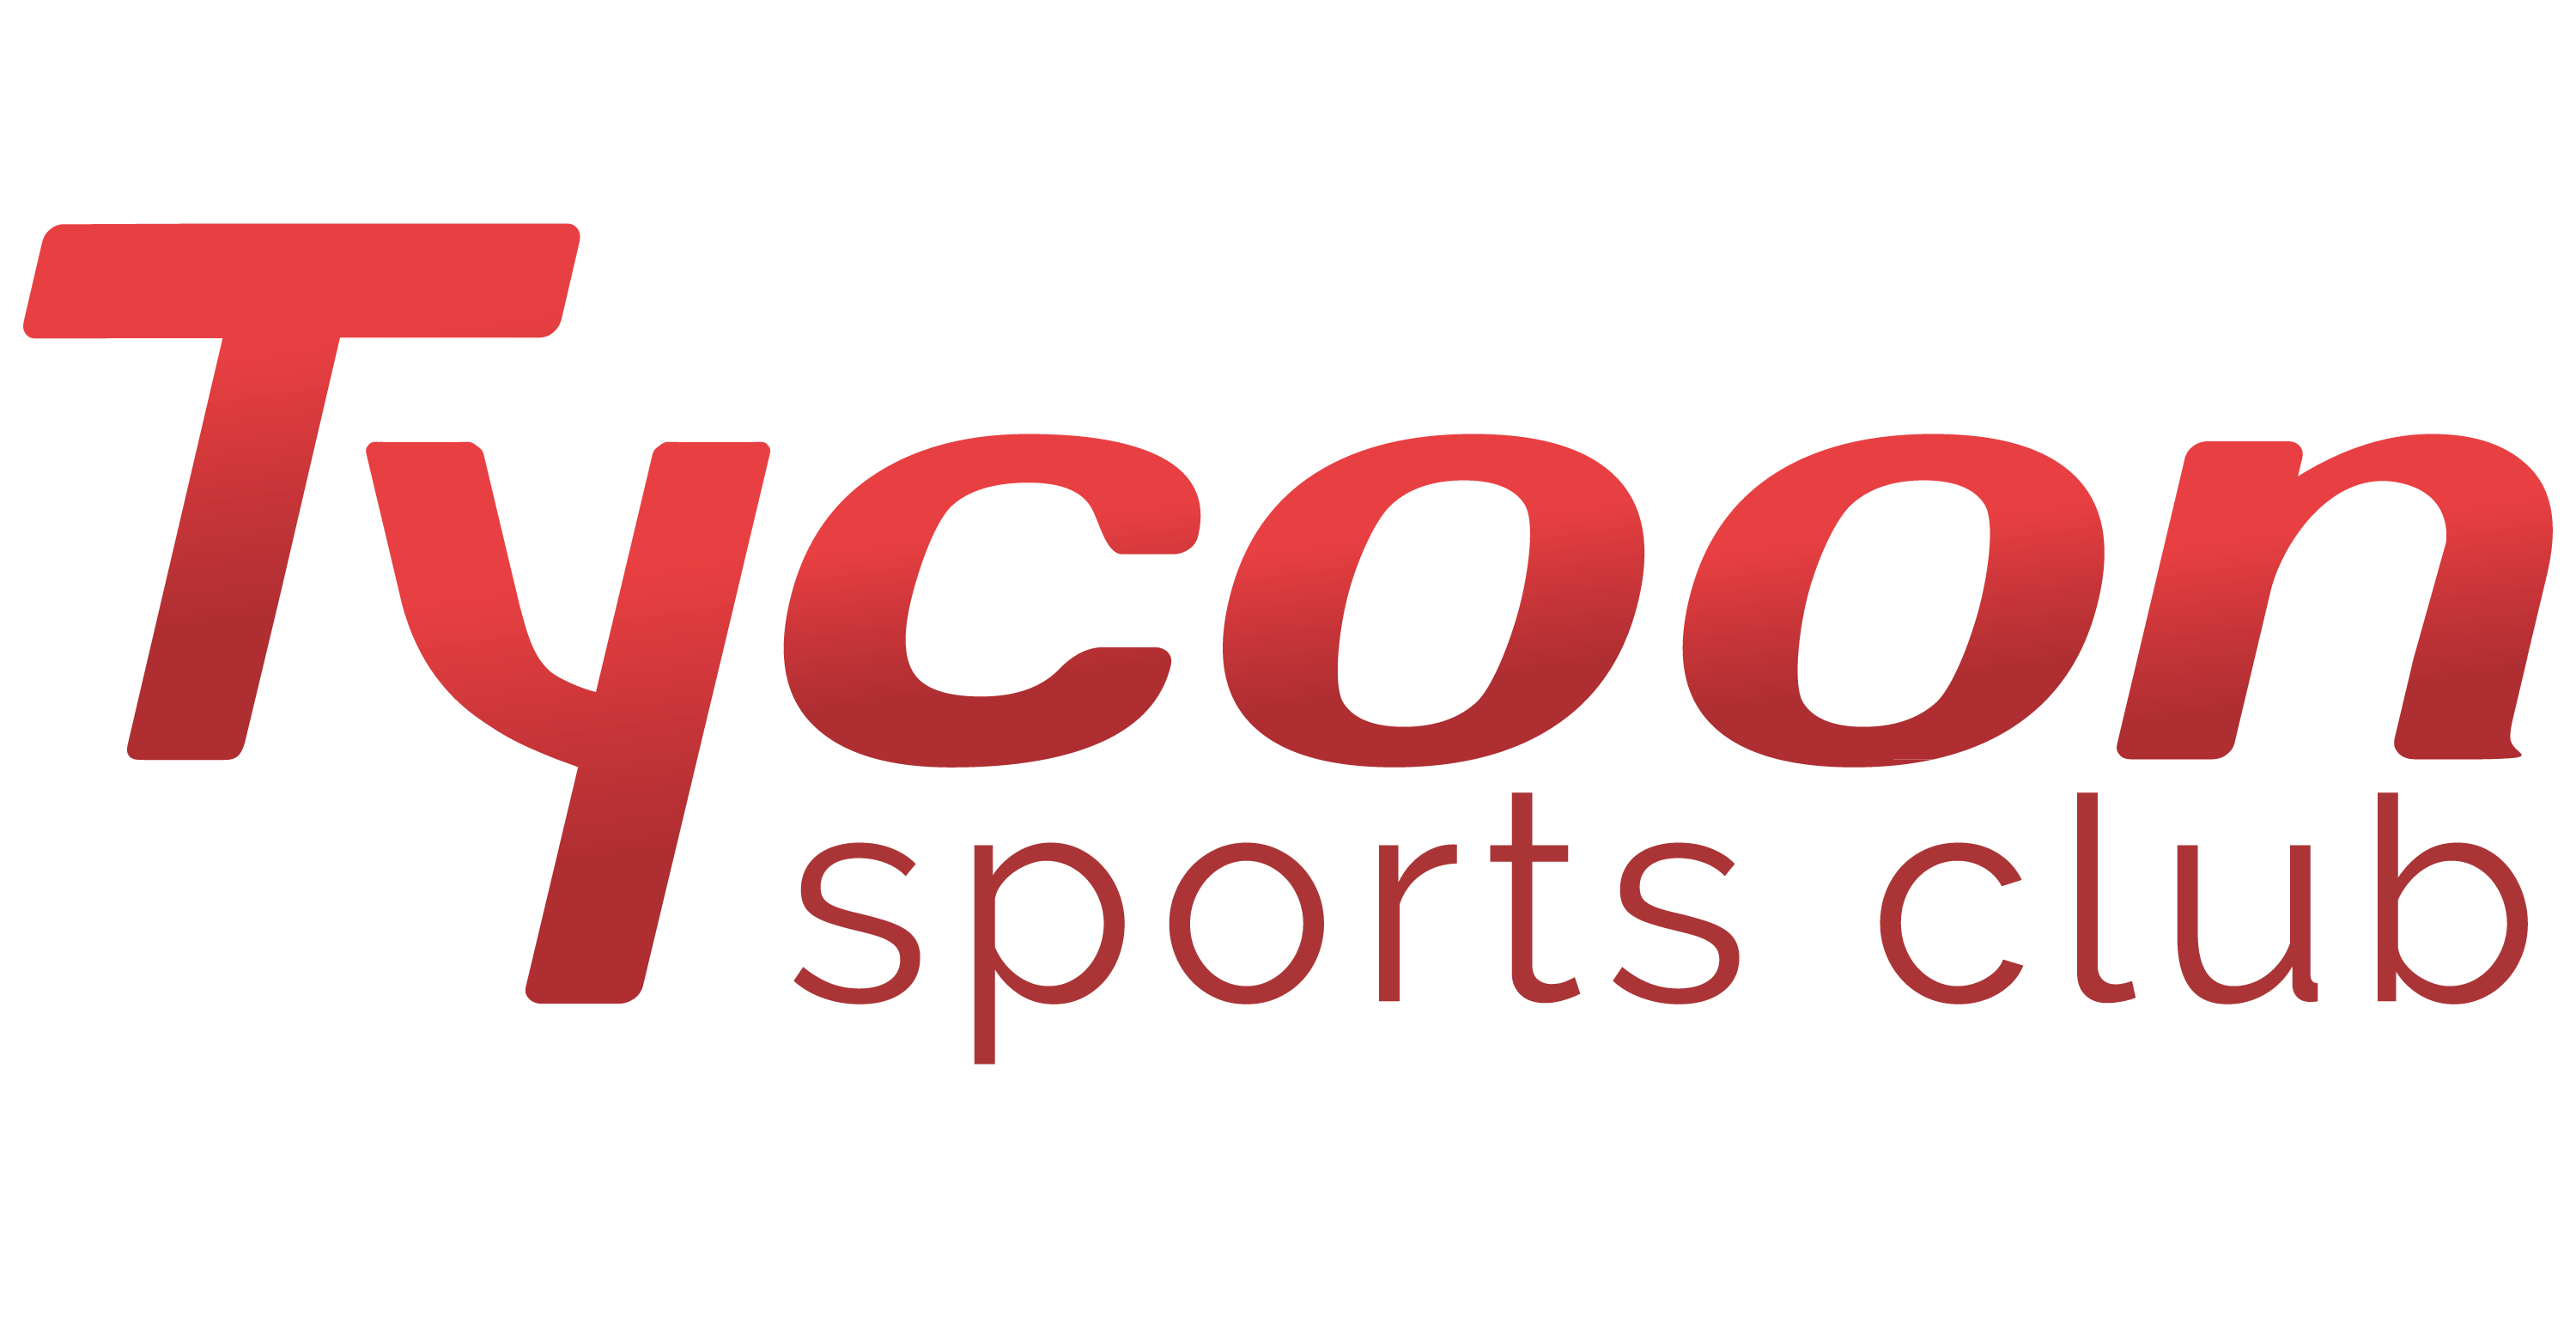 Tycoon sportsclub